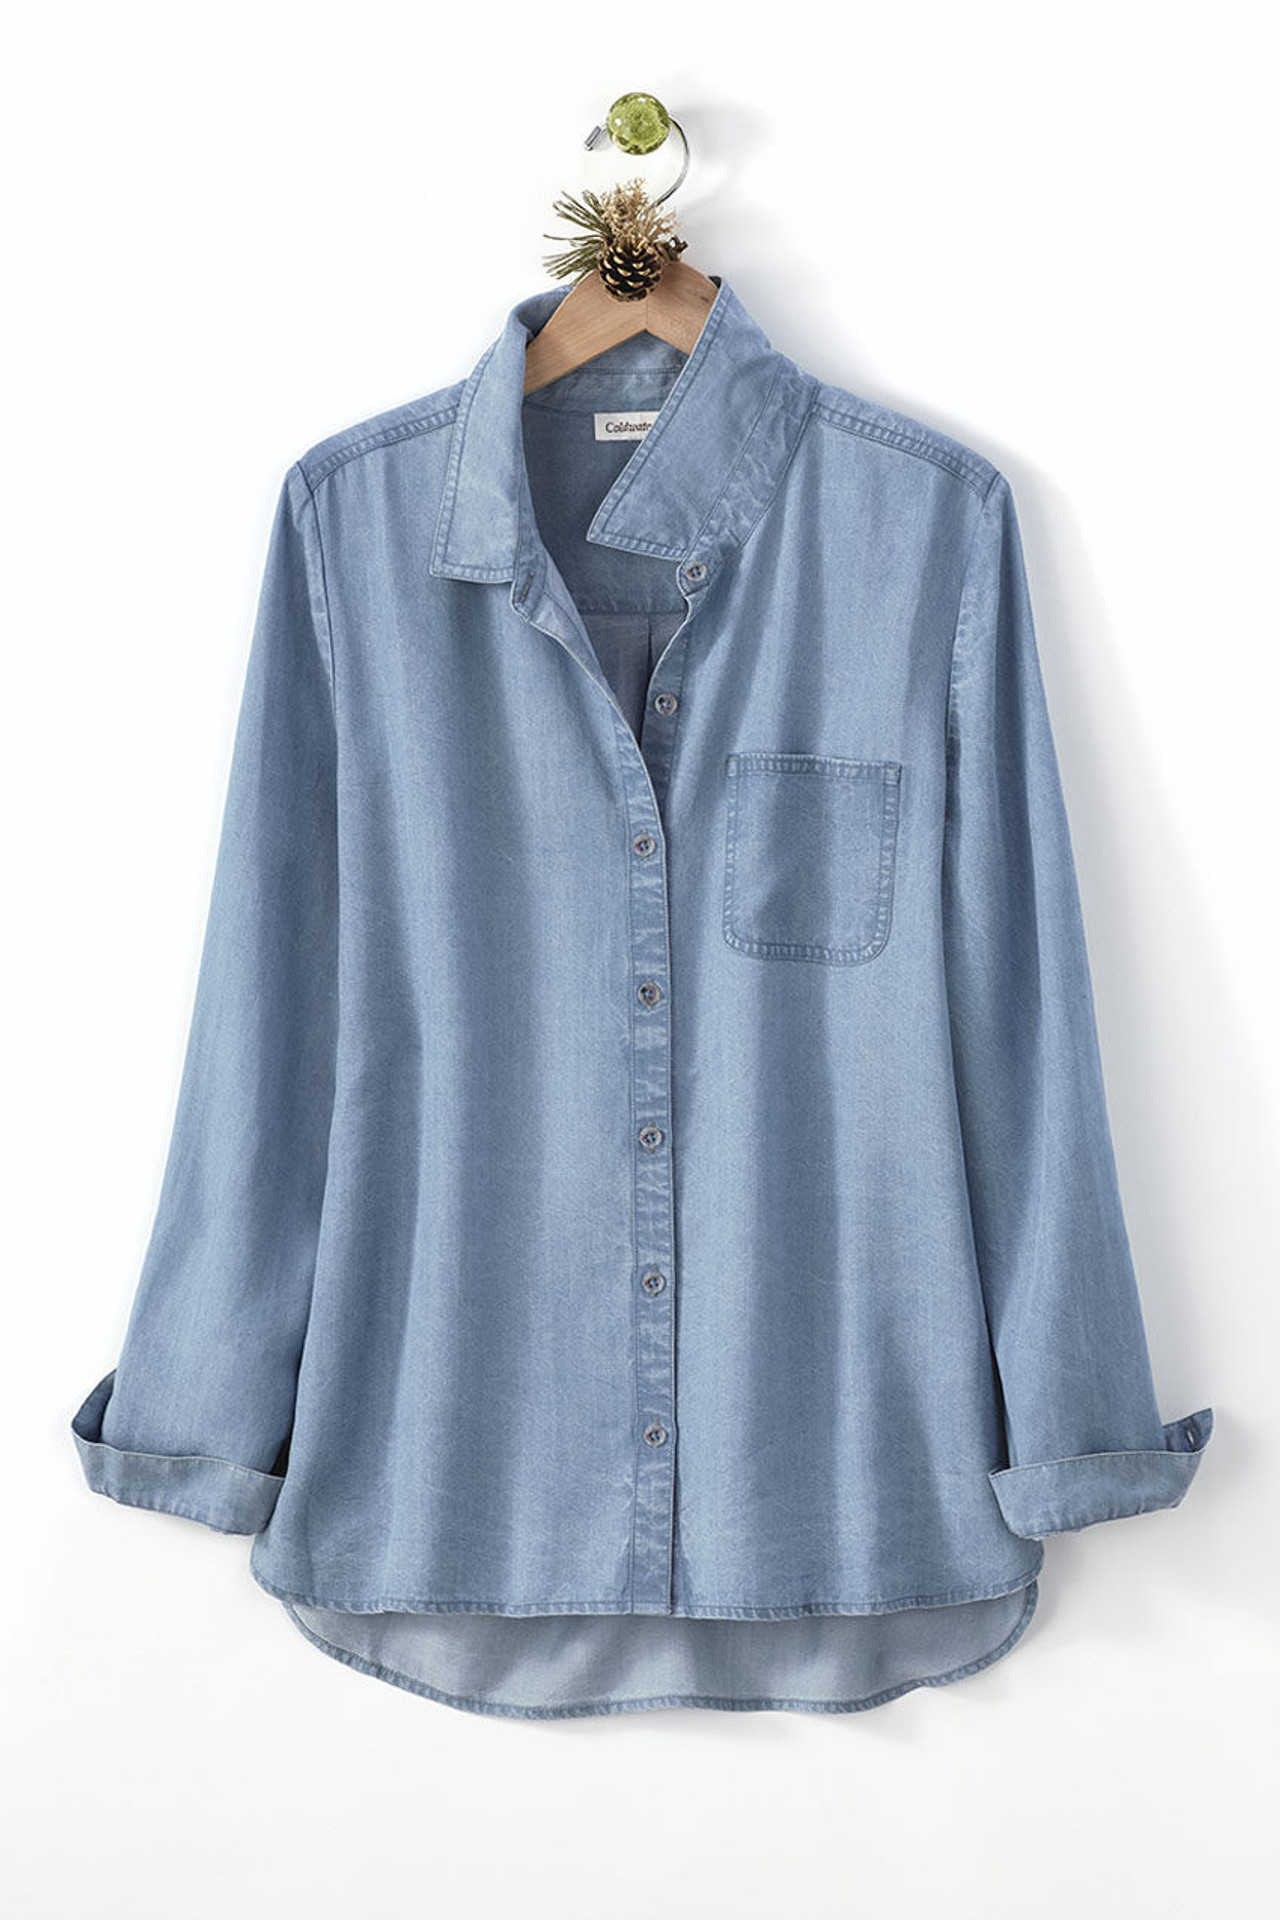 Women's Comfort Cotton/TENCEL Shirt, Long-Sleeve at L.L. Bean